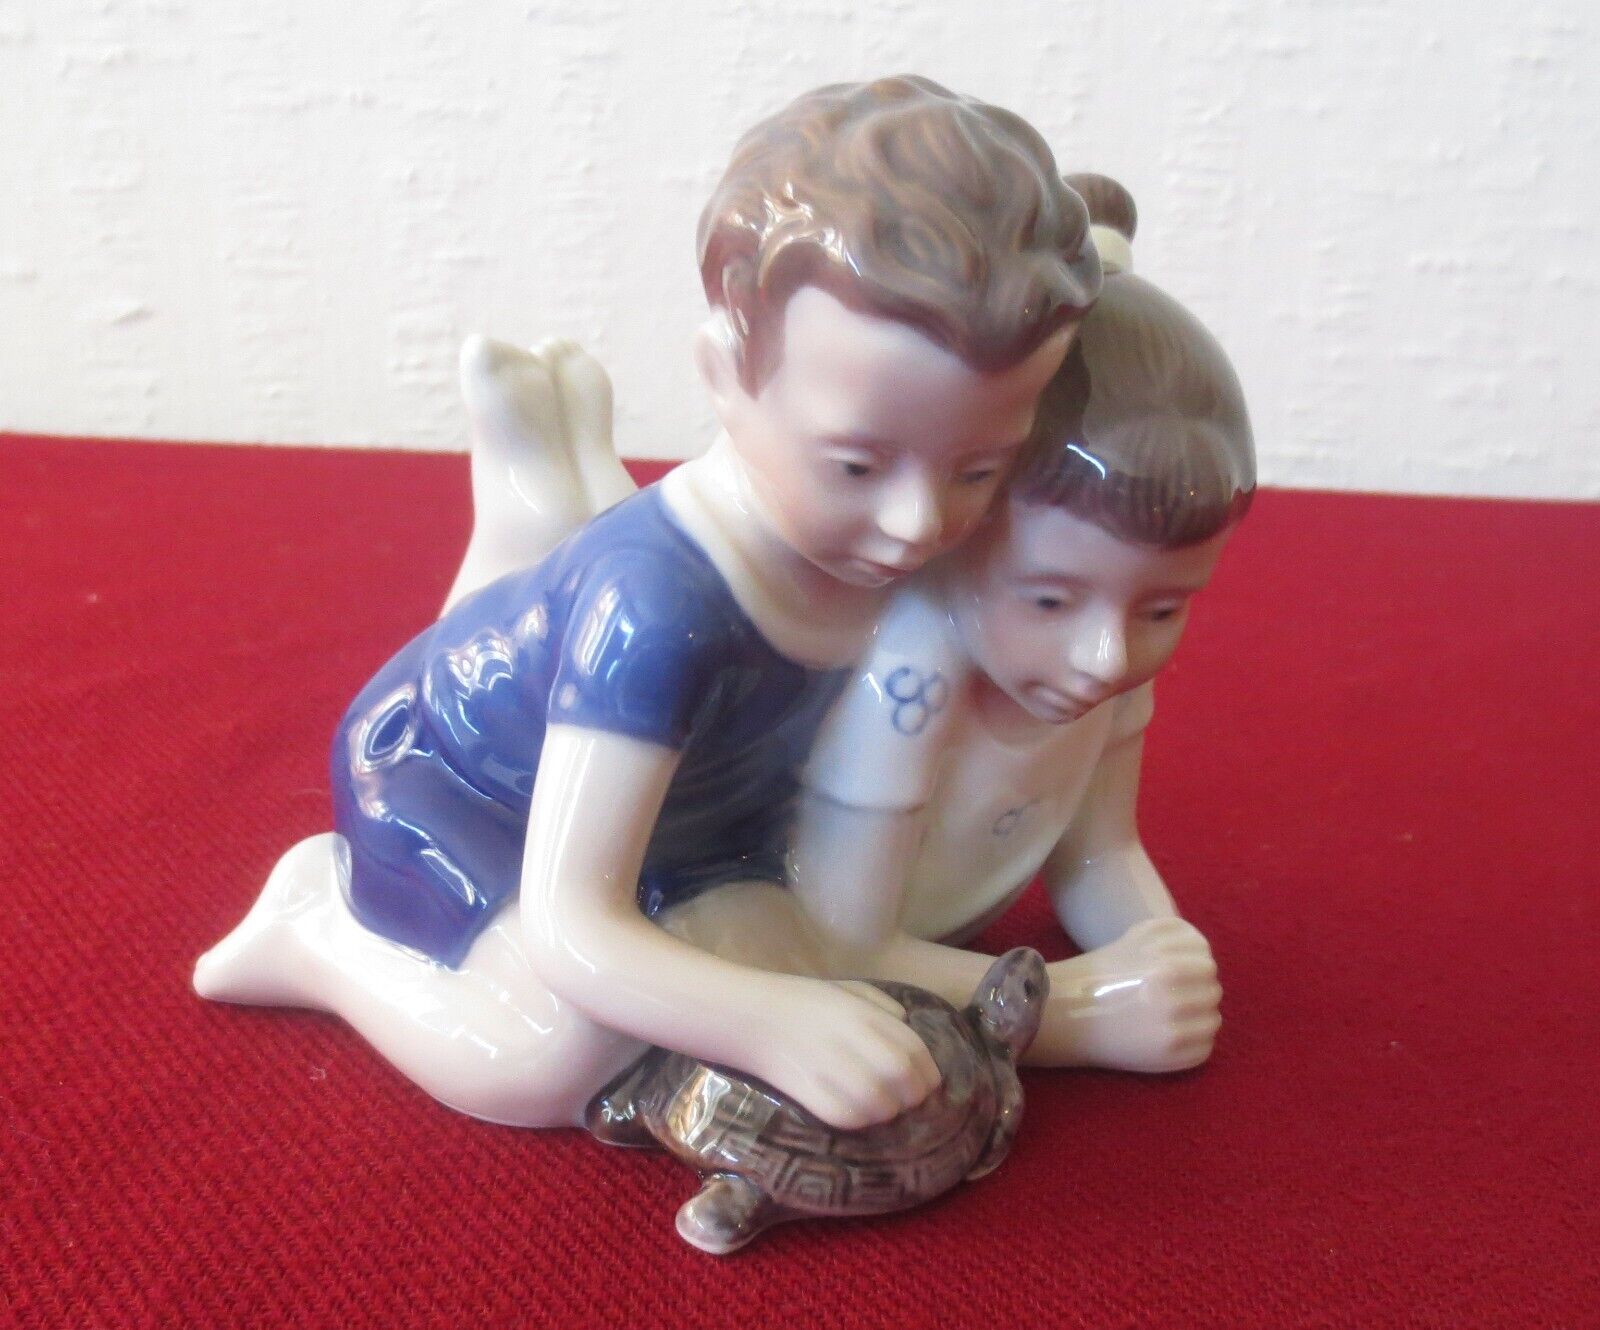 Lyngby Porcelæn, Denmark, Figure in Porcelain, Siblings with Turtle, 1940s # 4